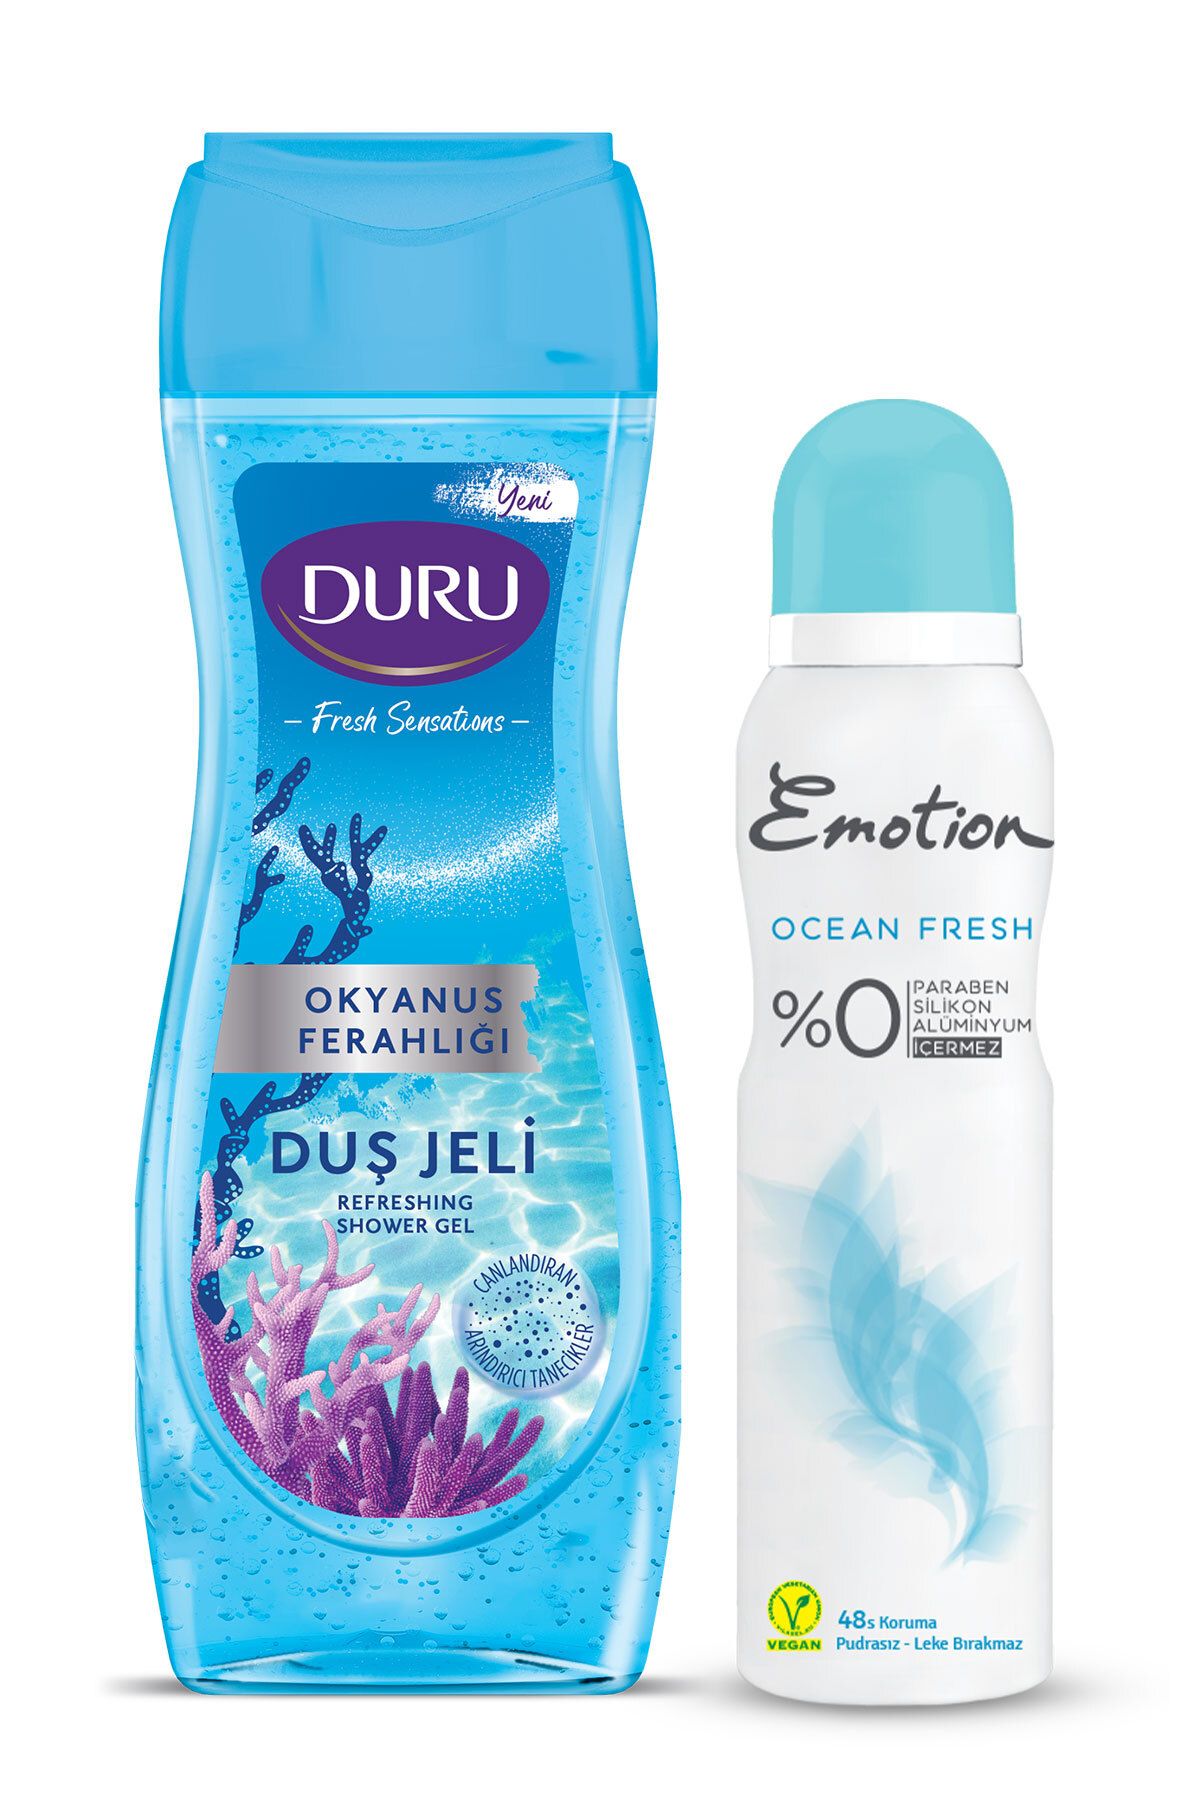 Emotion Ocean Fresh Deodorant 150 ml & Duru Fresh Sensations Okyanus Ferahlığı Duş Jeli 450 ml